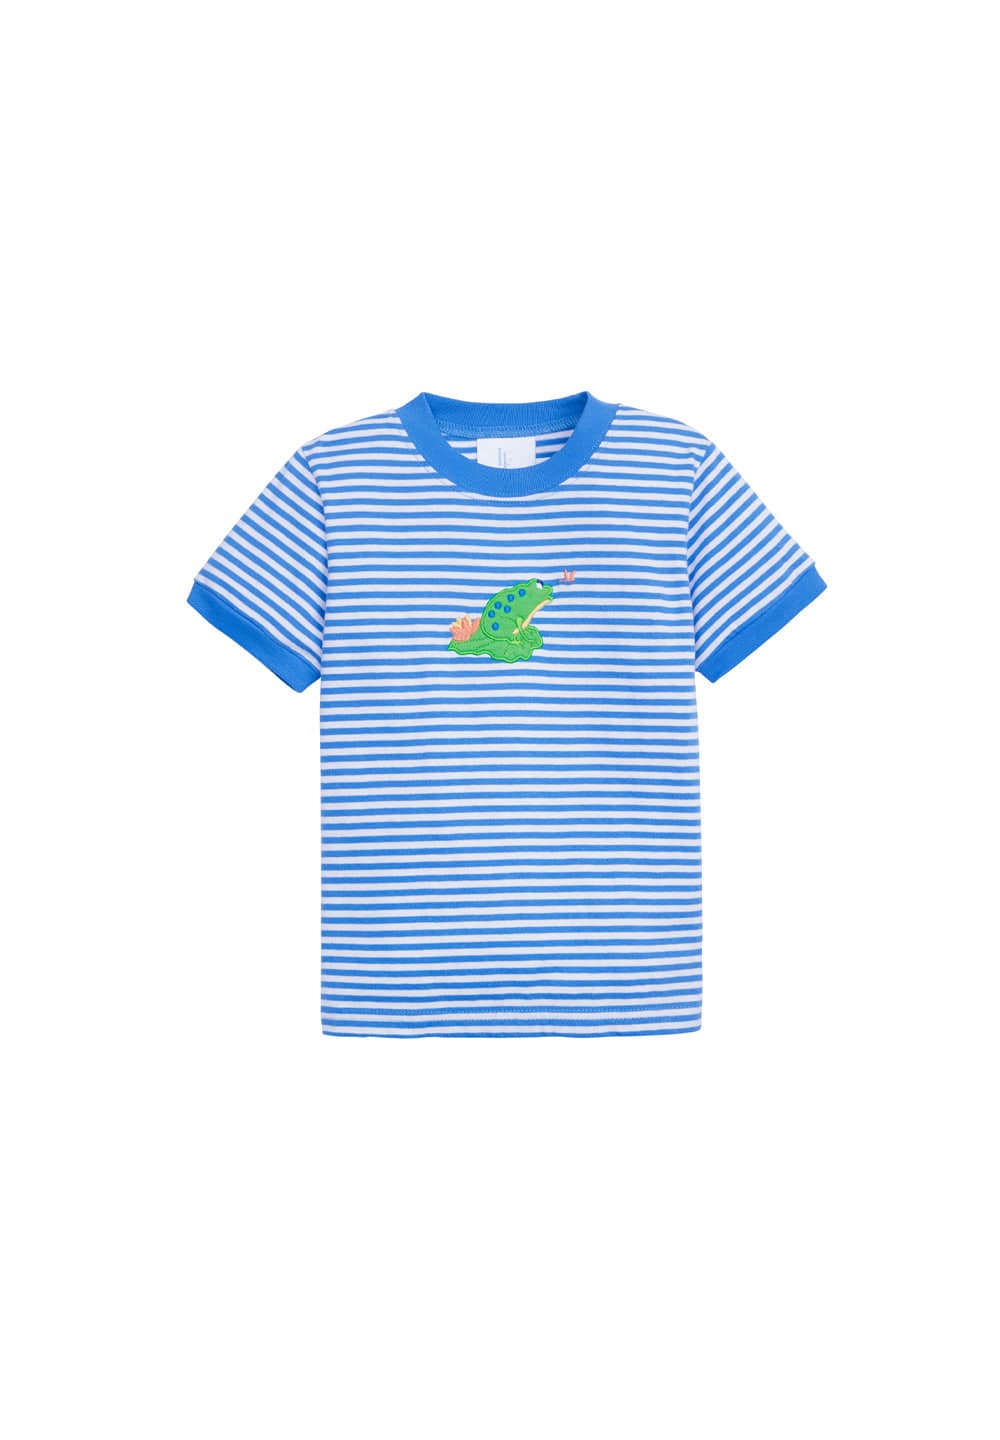 Little English Frog Applique T-Shirt